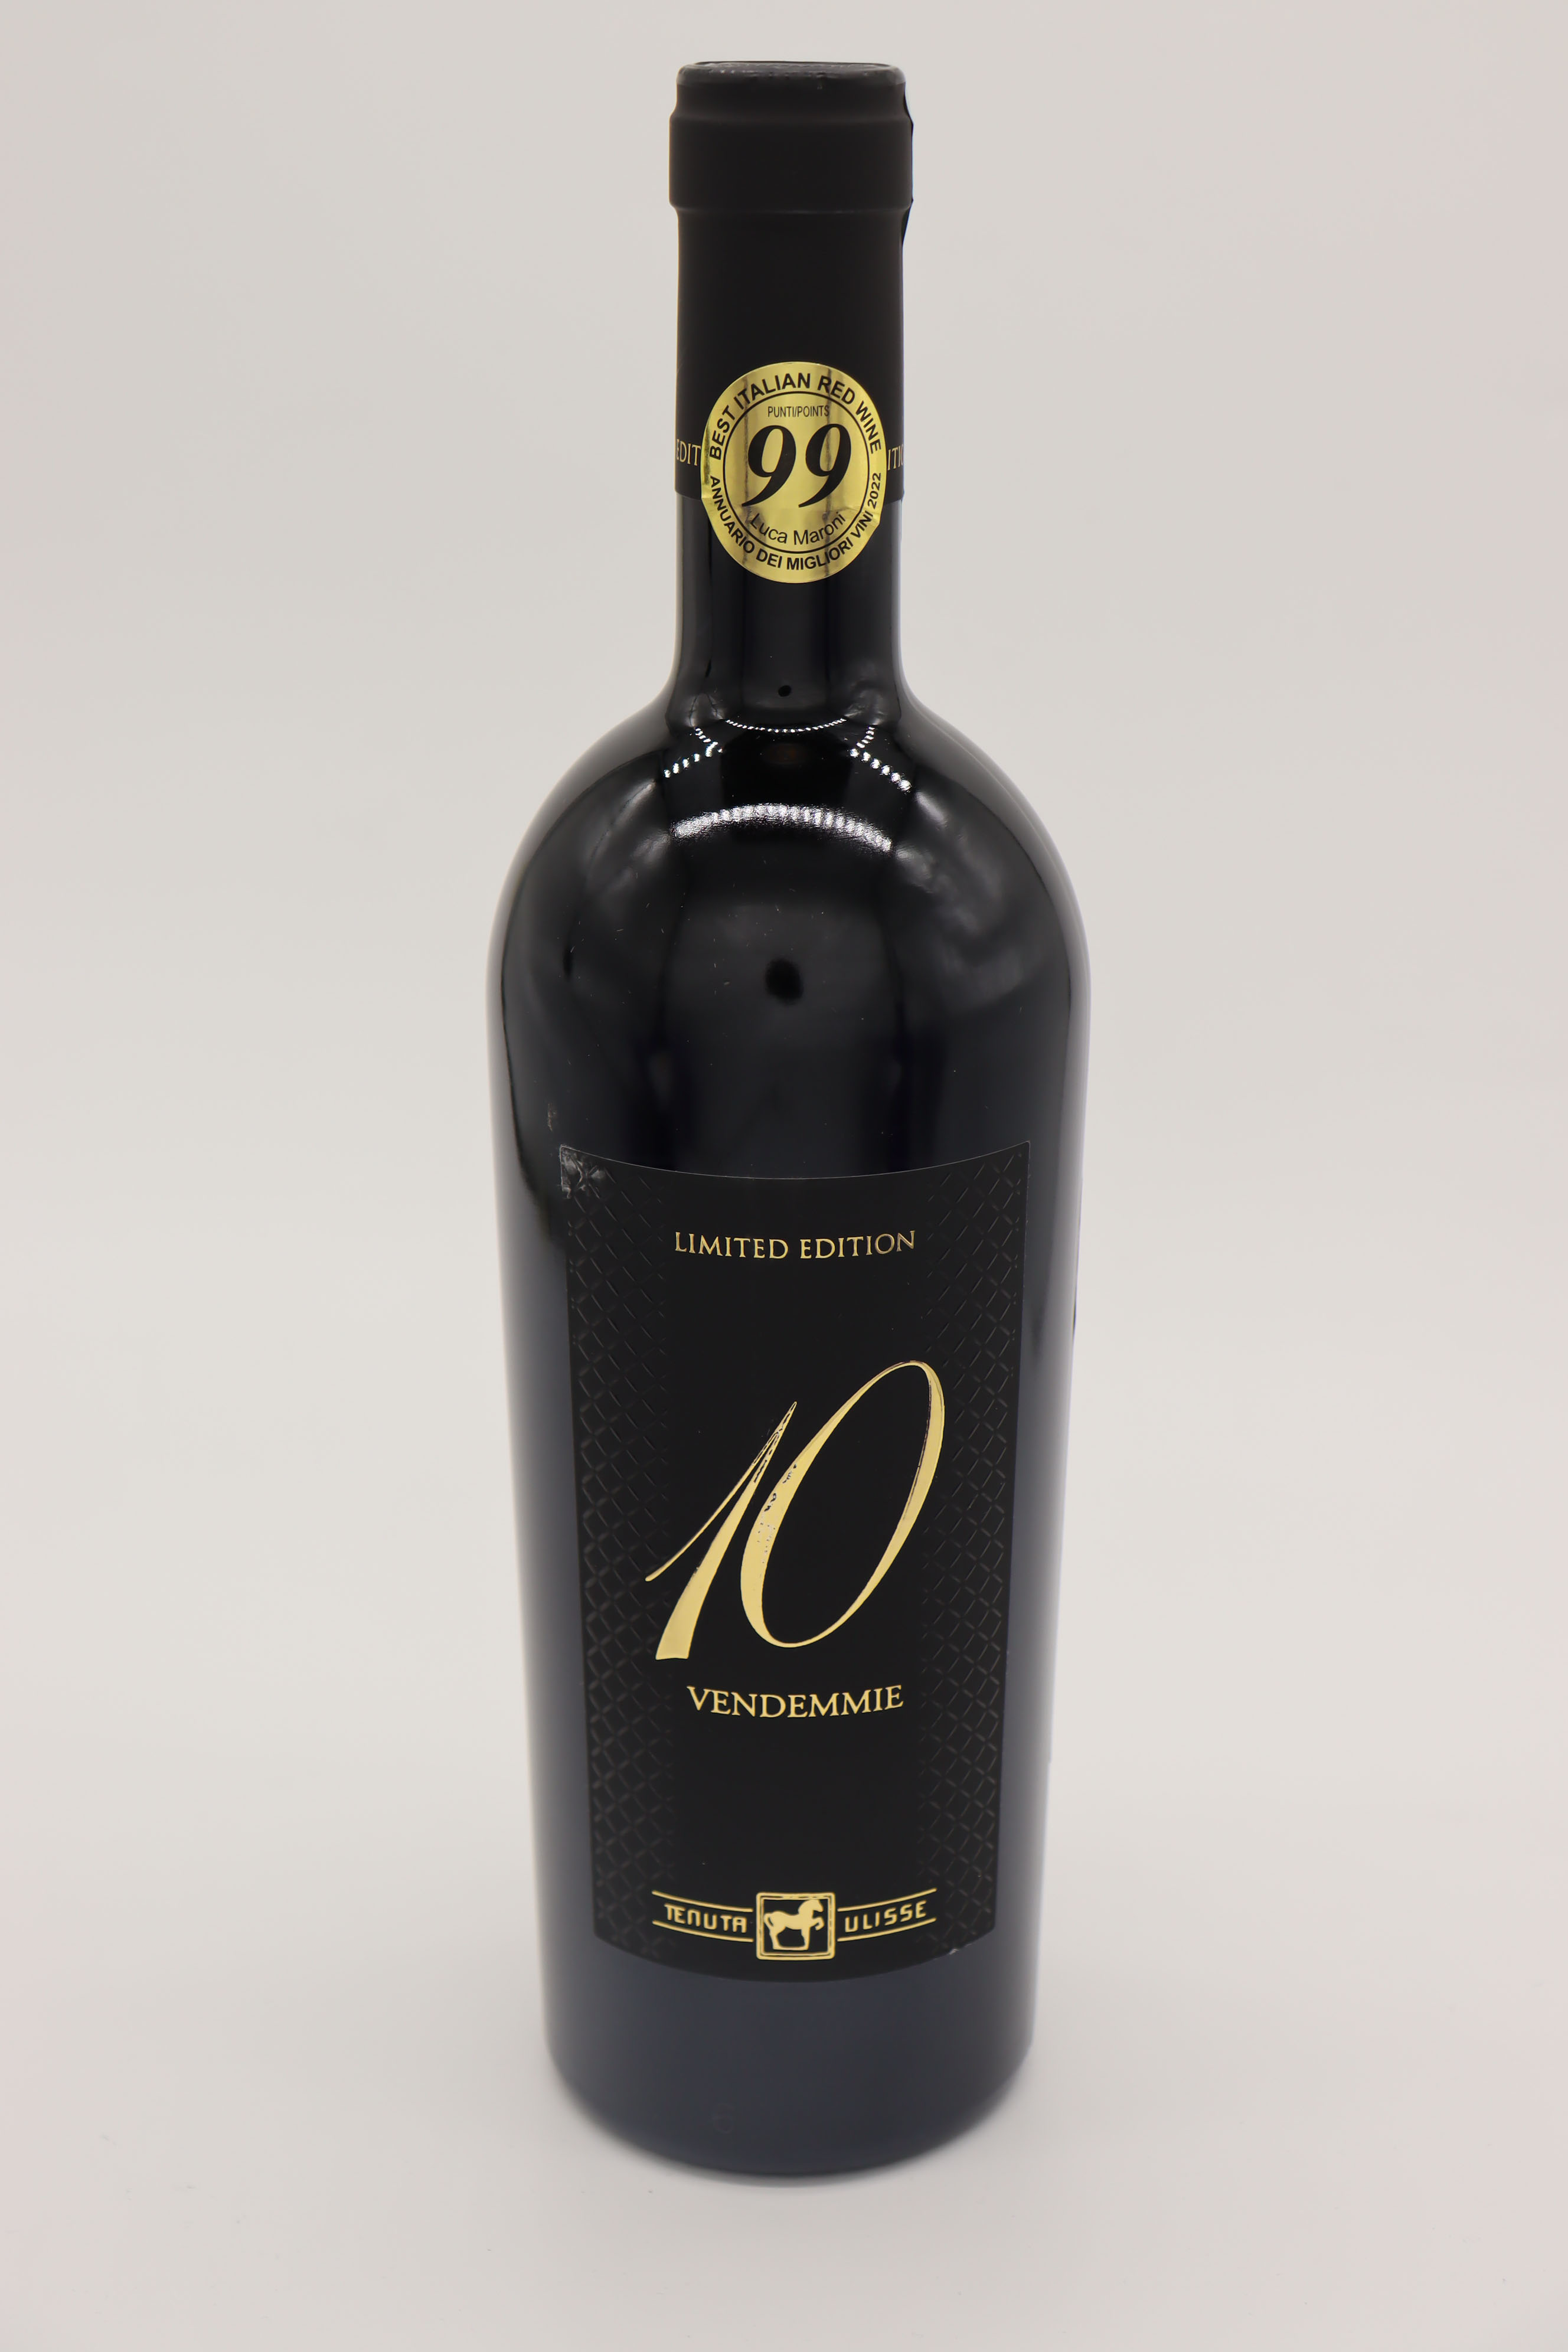 Вино Tenuta Ulisse "10 Vendemmie" Limited Edition, 0.75